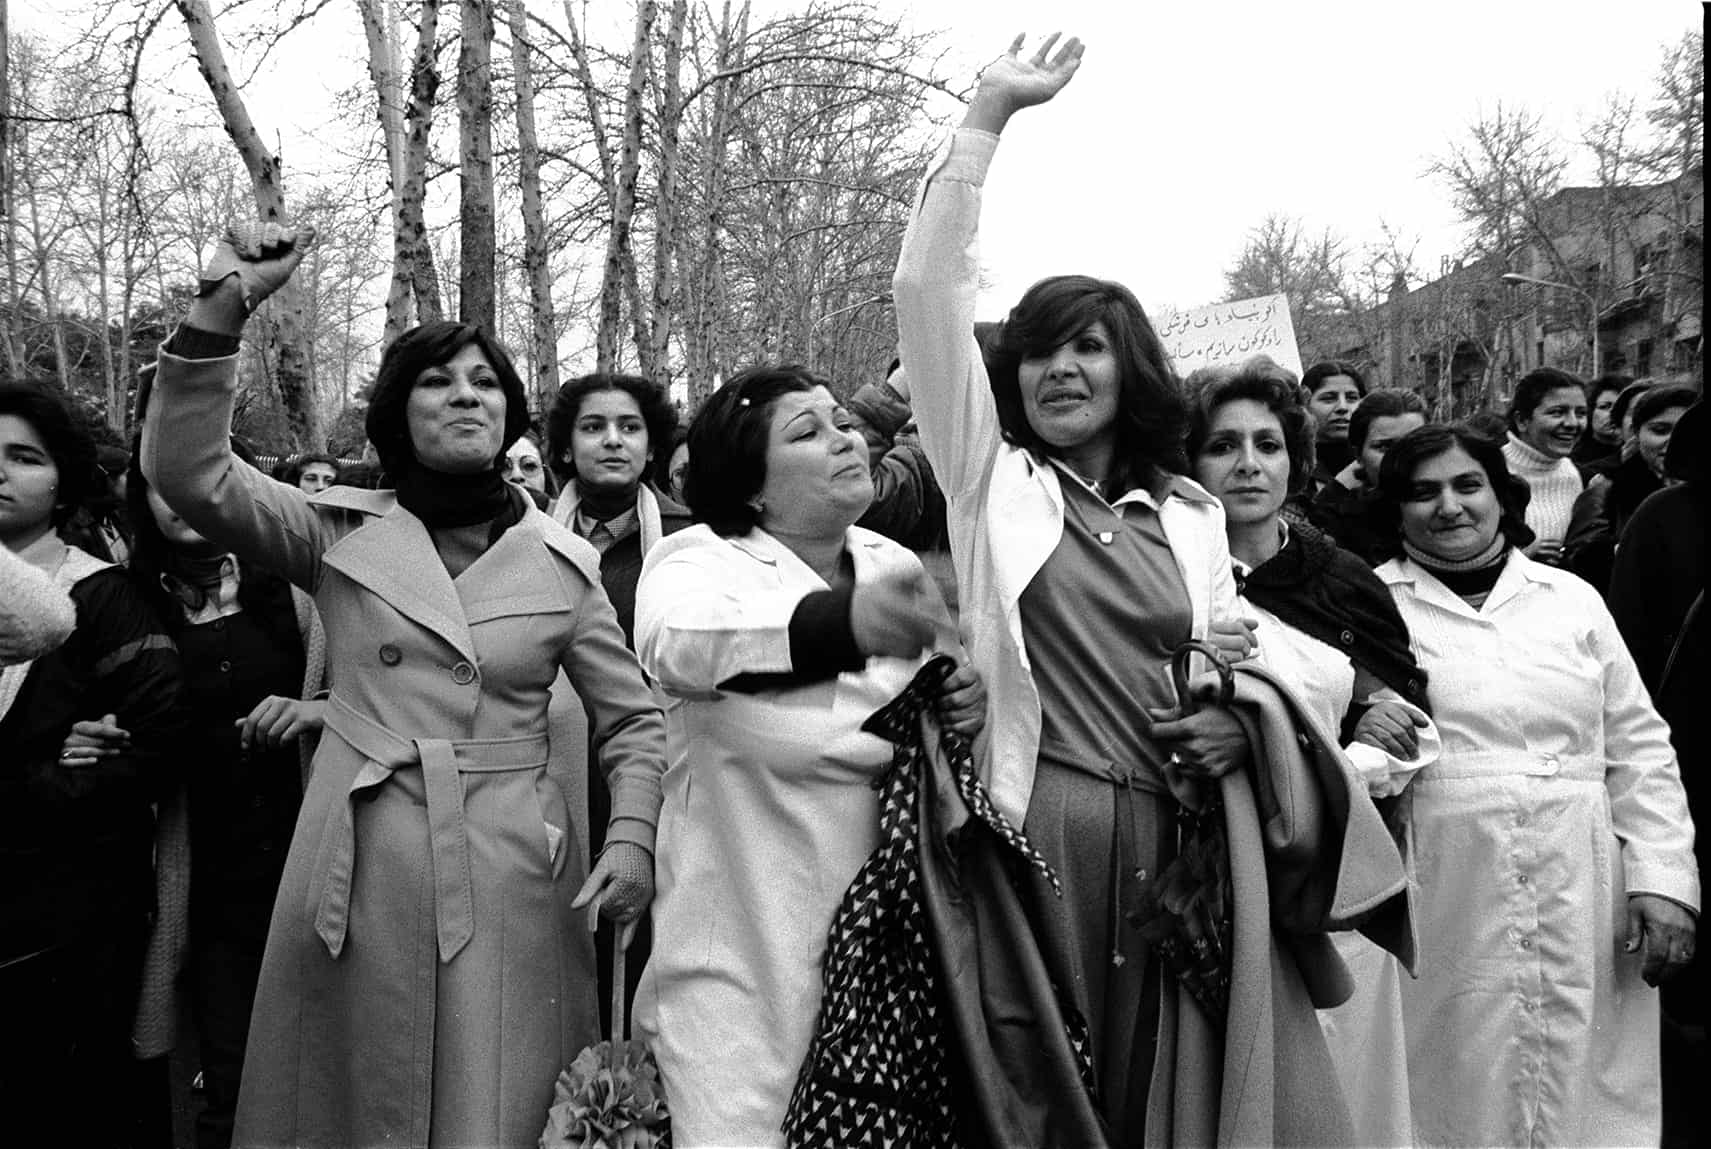 Иран 80 годы. Иран 1979 год. Иран до революции 1979 года. Иран до исламской революции 1979. Иран до и после революции 1979.